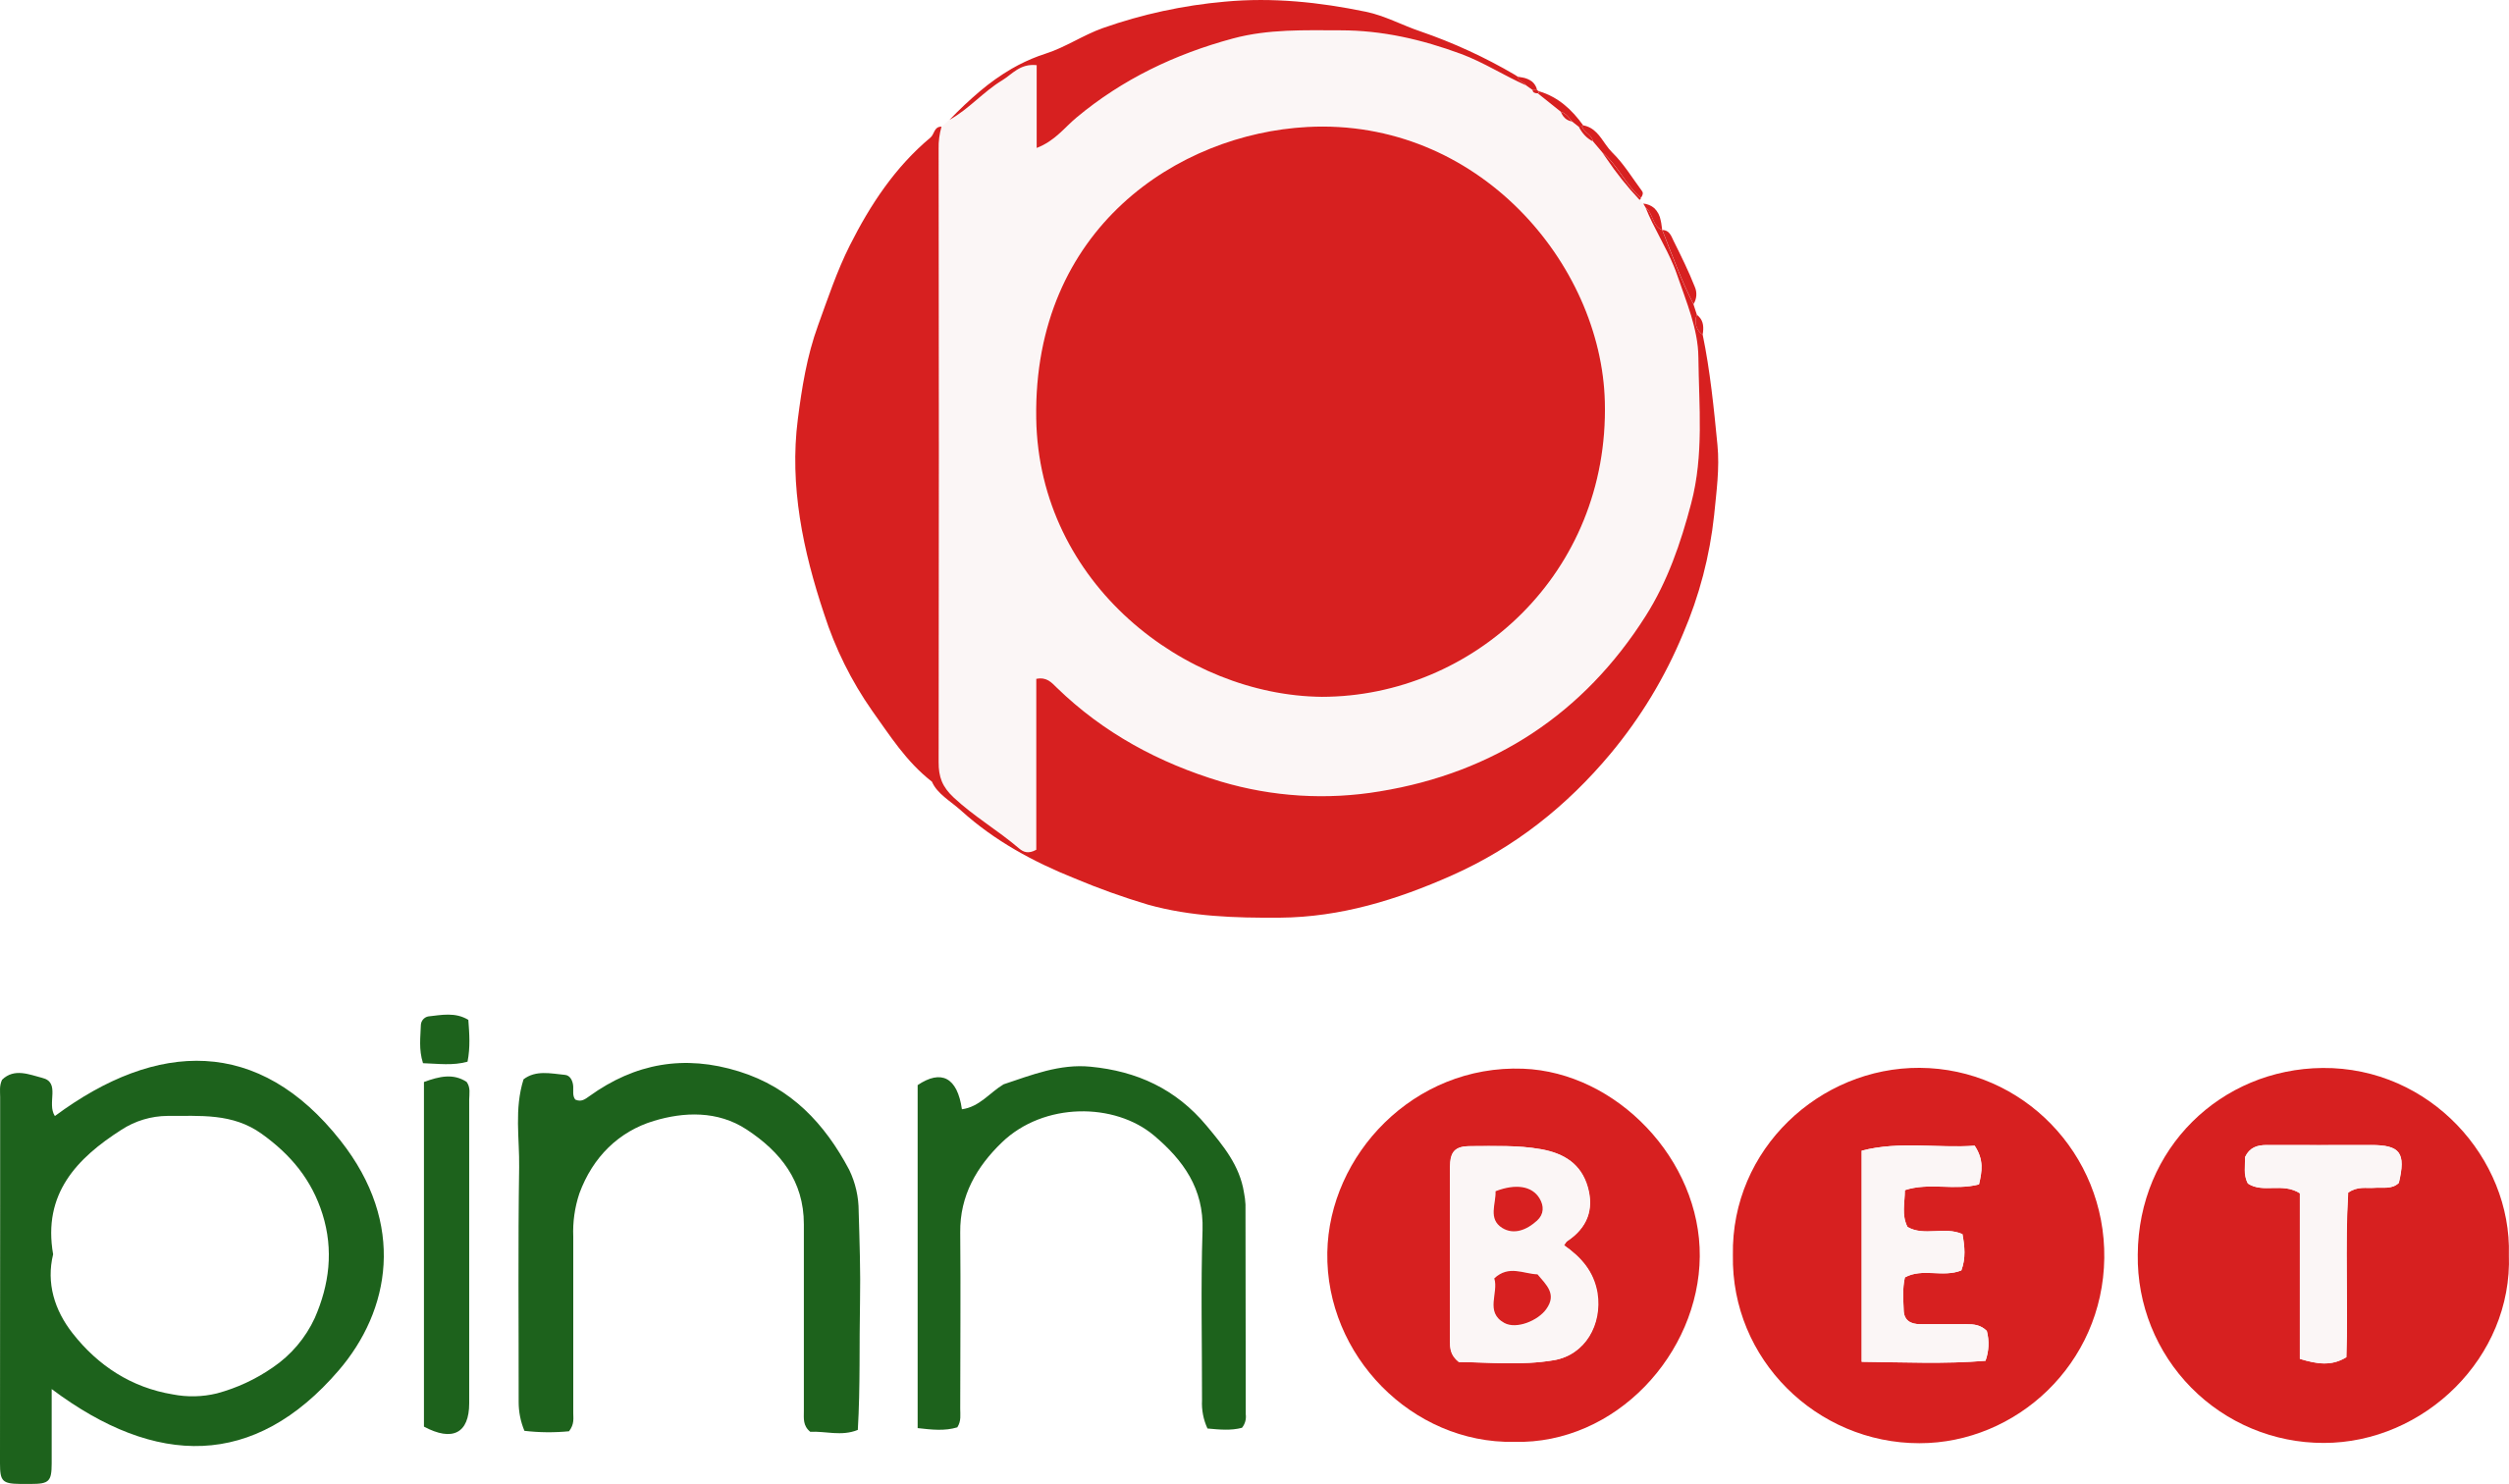 Логотип Pinnbet